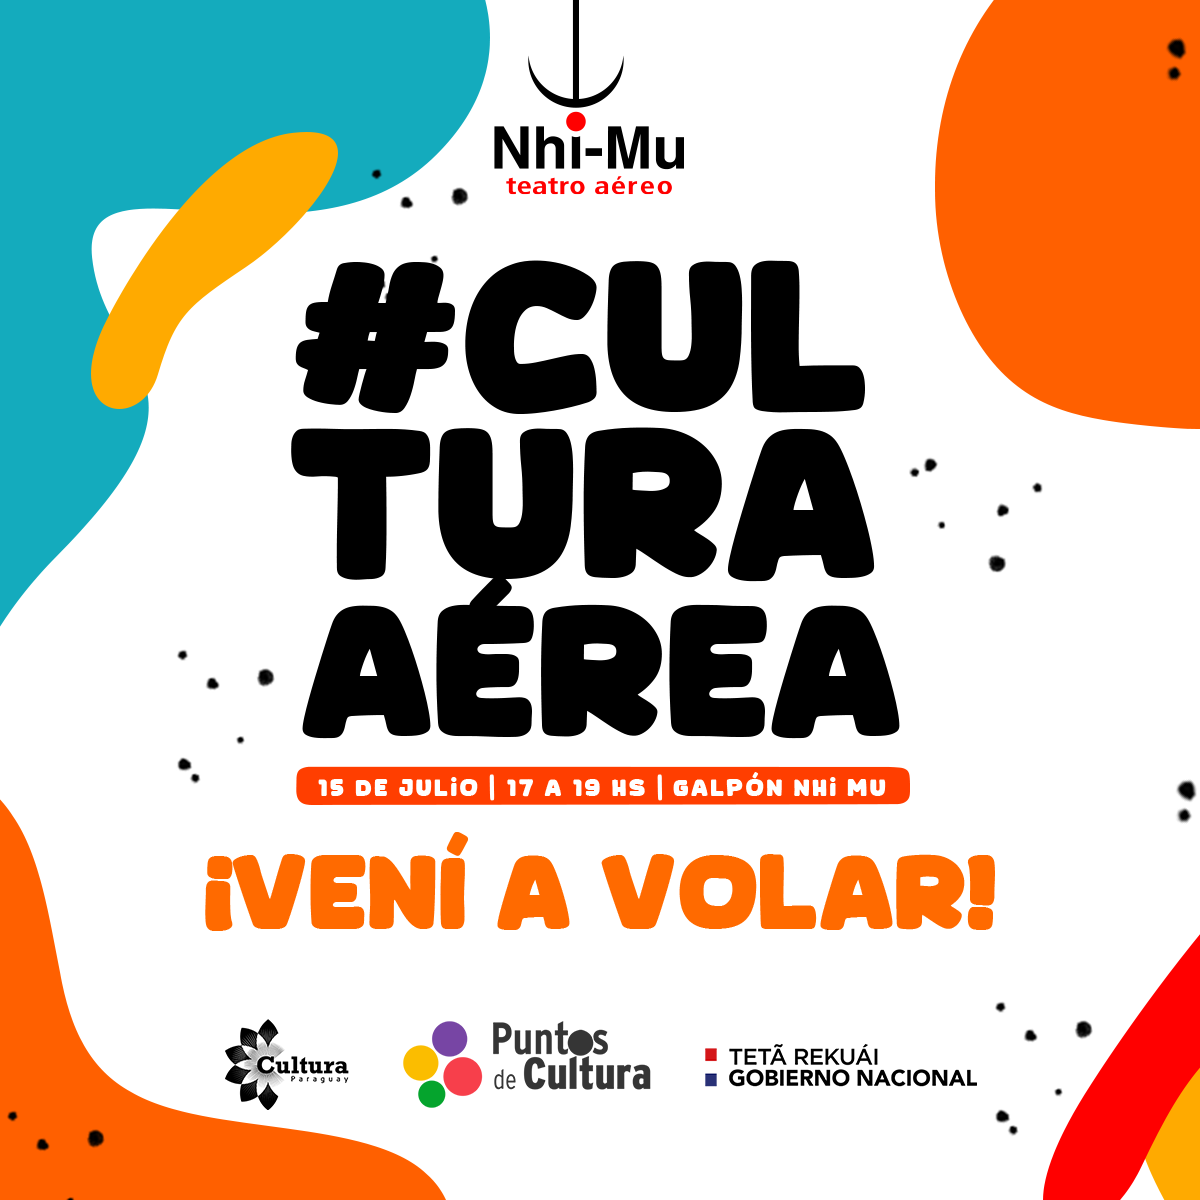 Nhi-Mu Teatro Aéreo invita a volar con #Culturaerea imagen